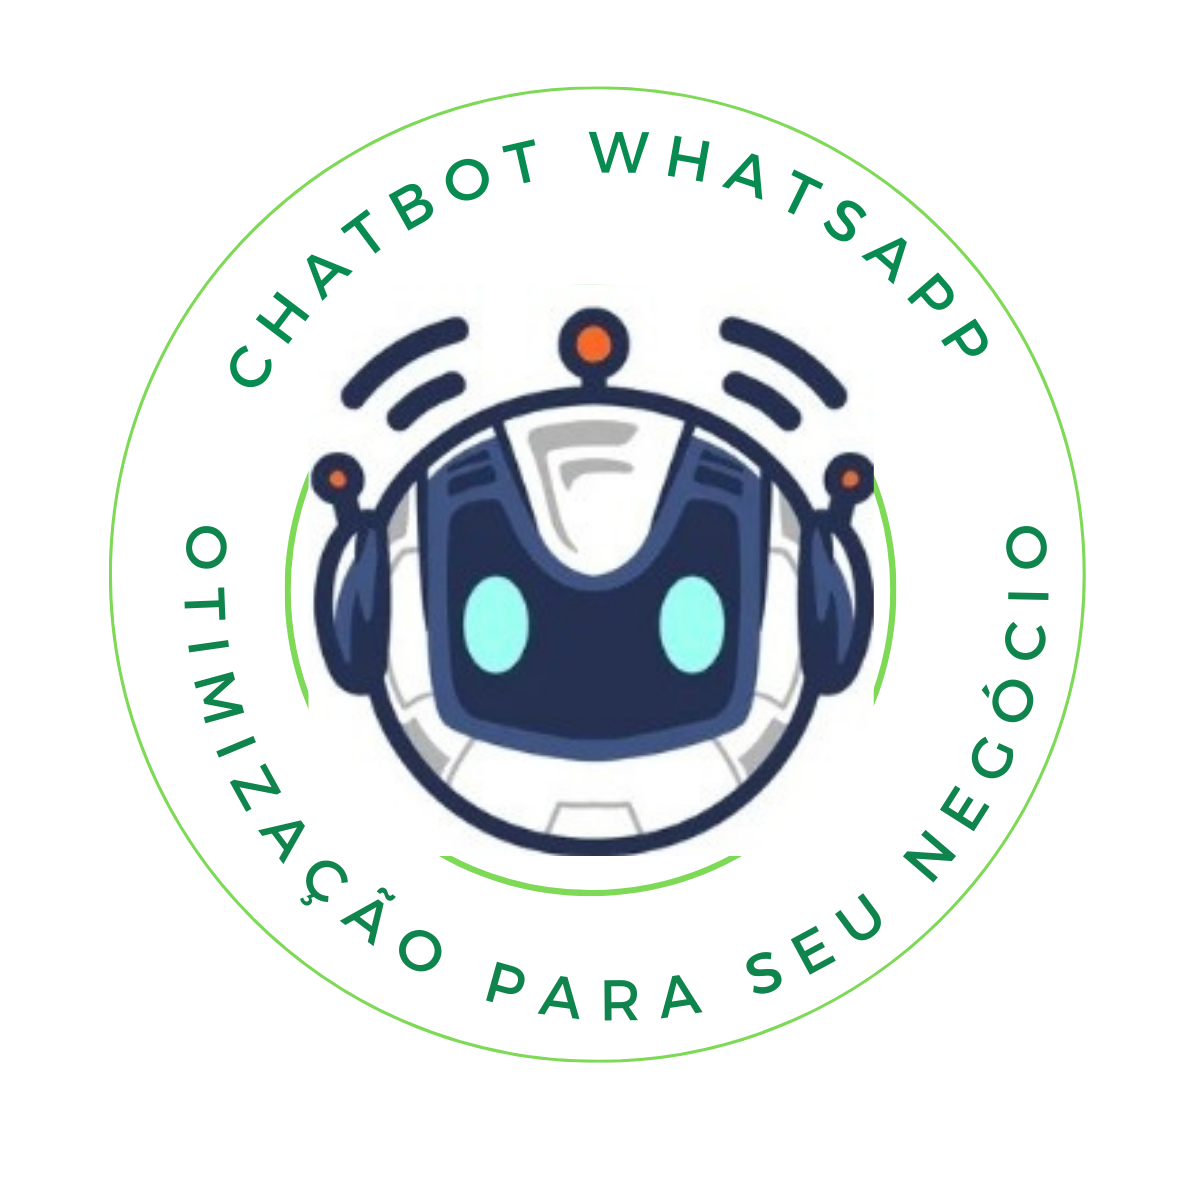 Inteligência artificial chatbot